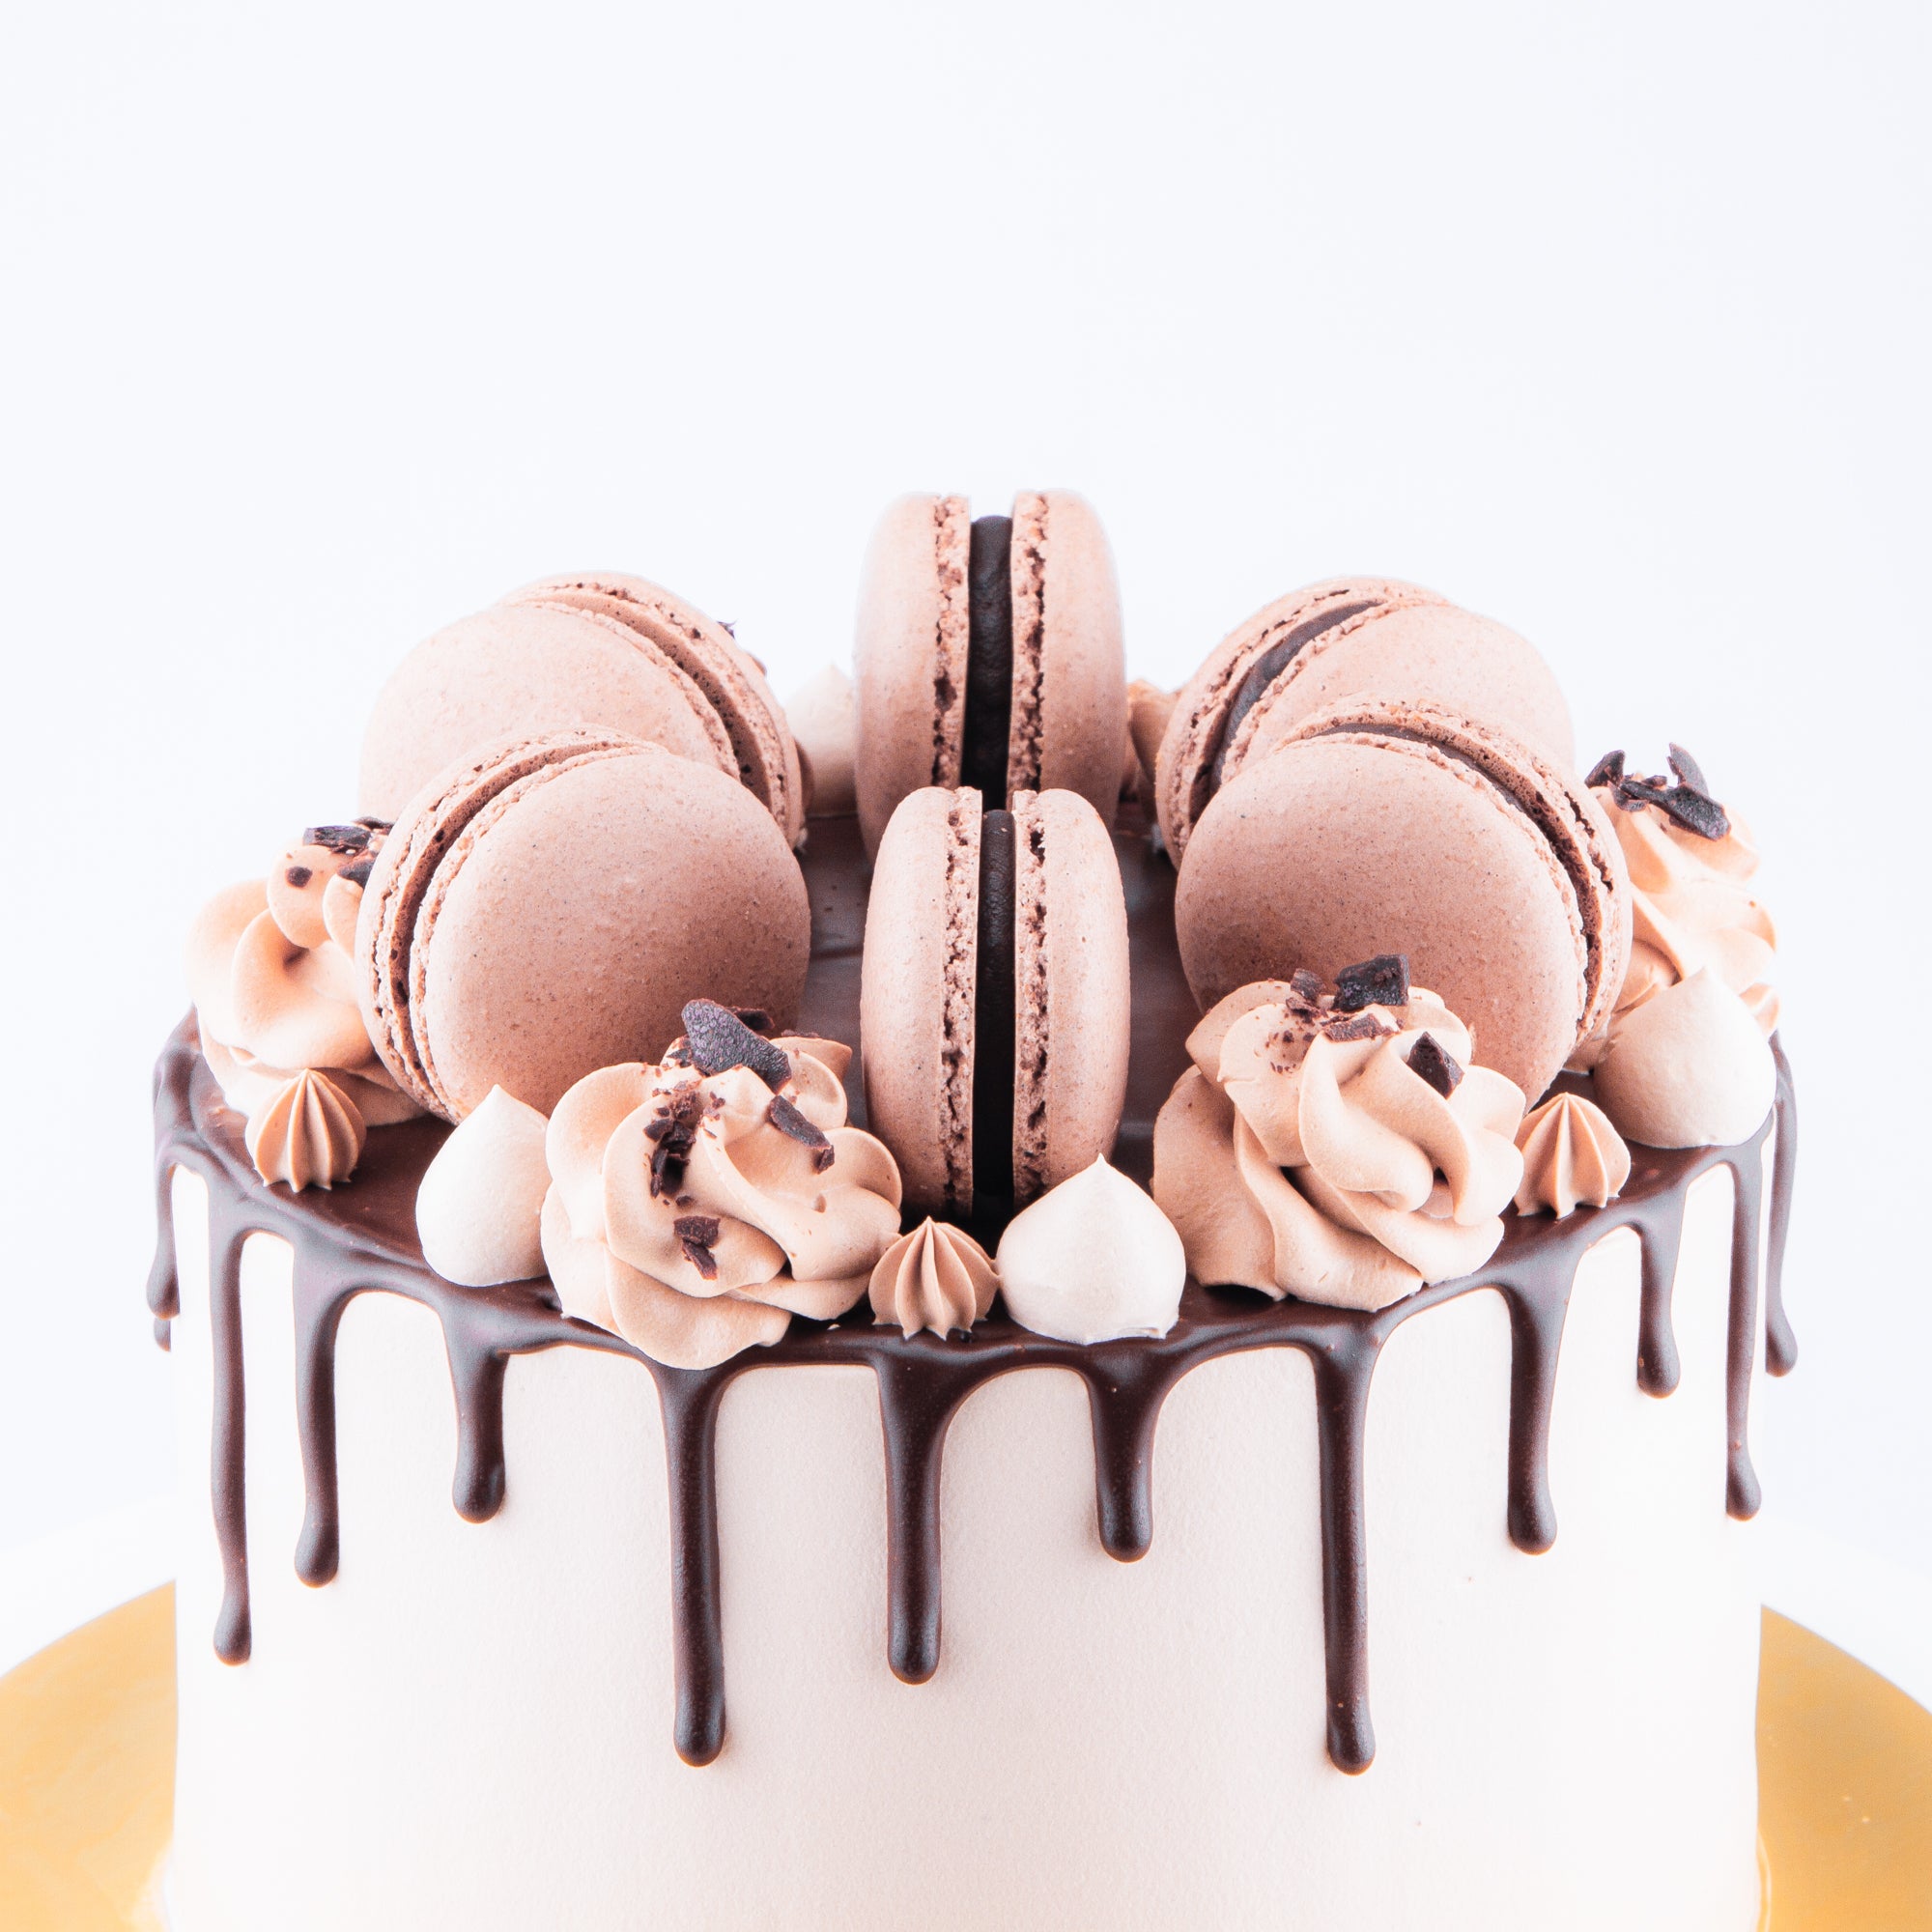 Premium Truffle Designer Cake - Buy, Send & Order Online Delivery In India  - Cake2homes